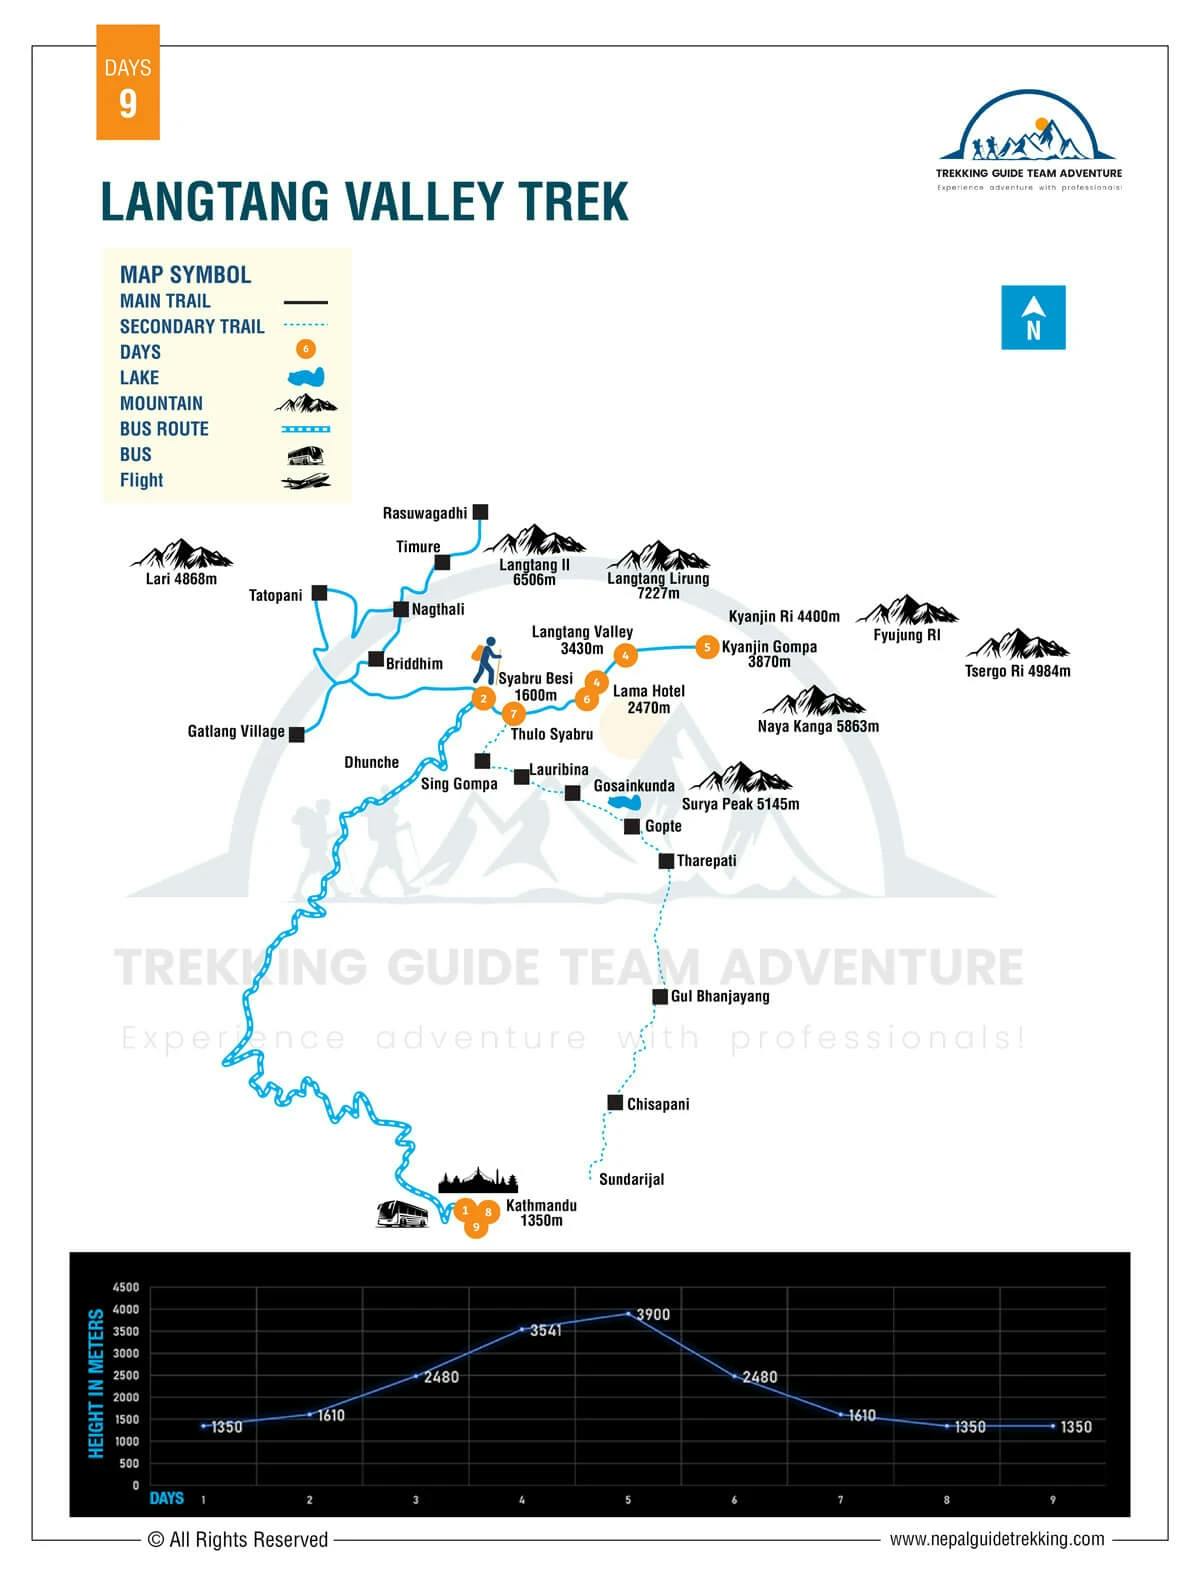 Langtang Valley Trek - 9 Days